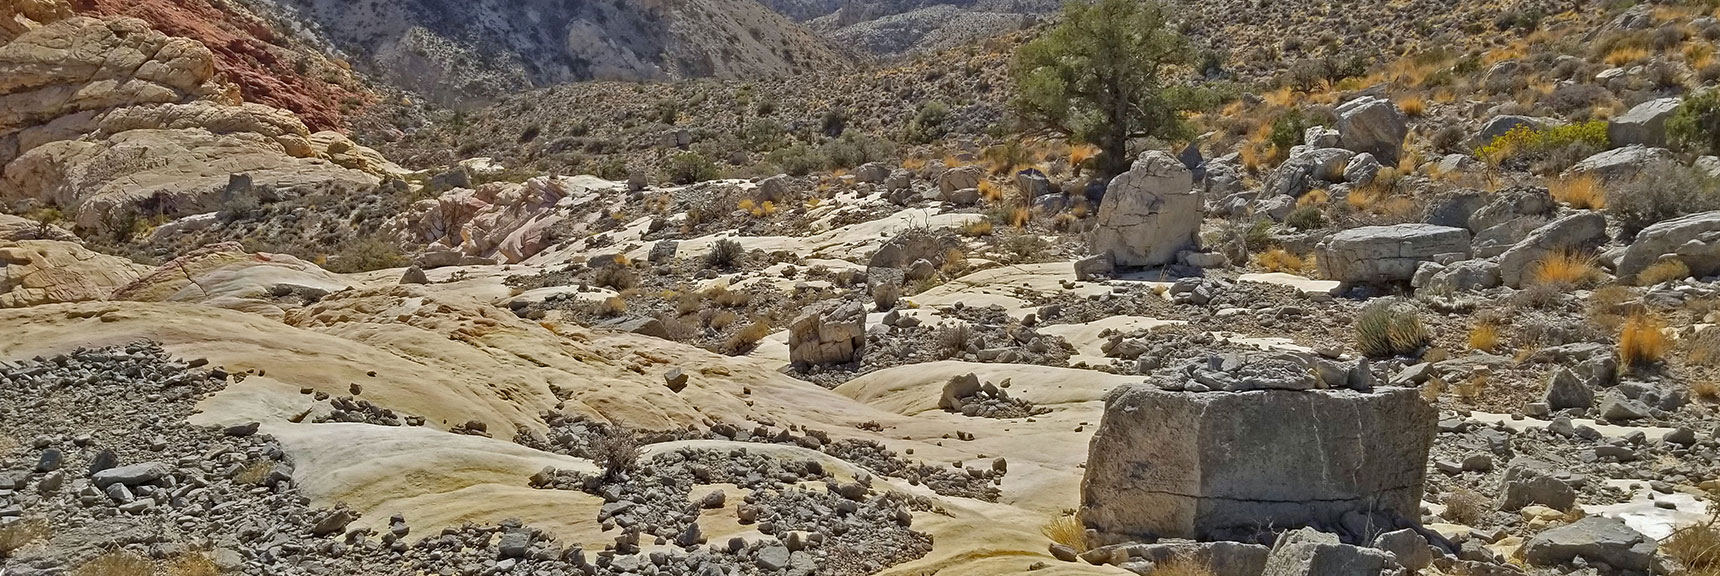 View Back Down Toward Gateway Canyon. Scattered Fallen Rock from Turtlehead Peak | Kraft Mountain, Gateway Canyon Loop, Calico Basin, Nevada